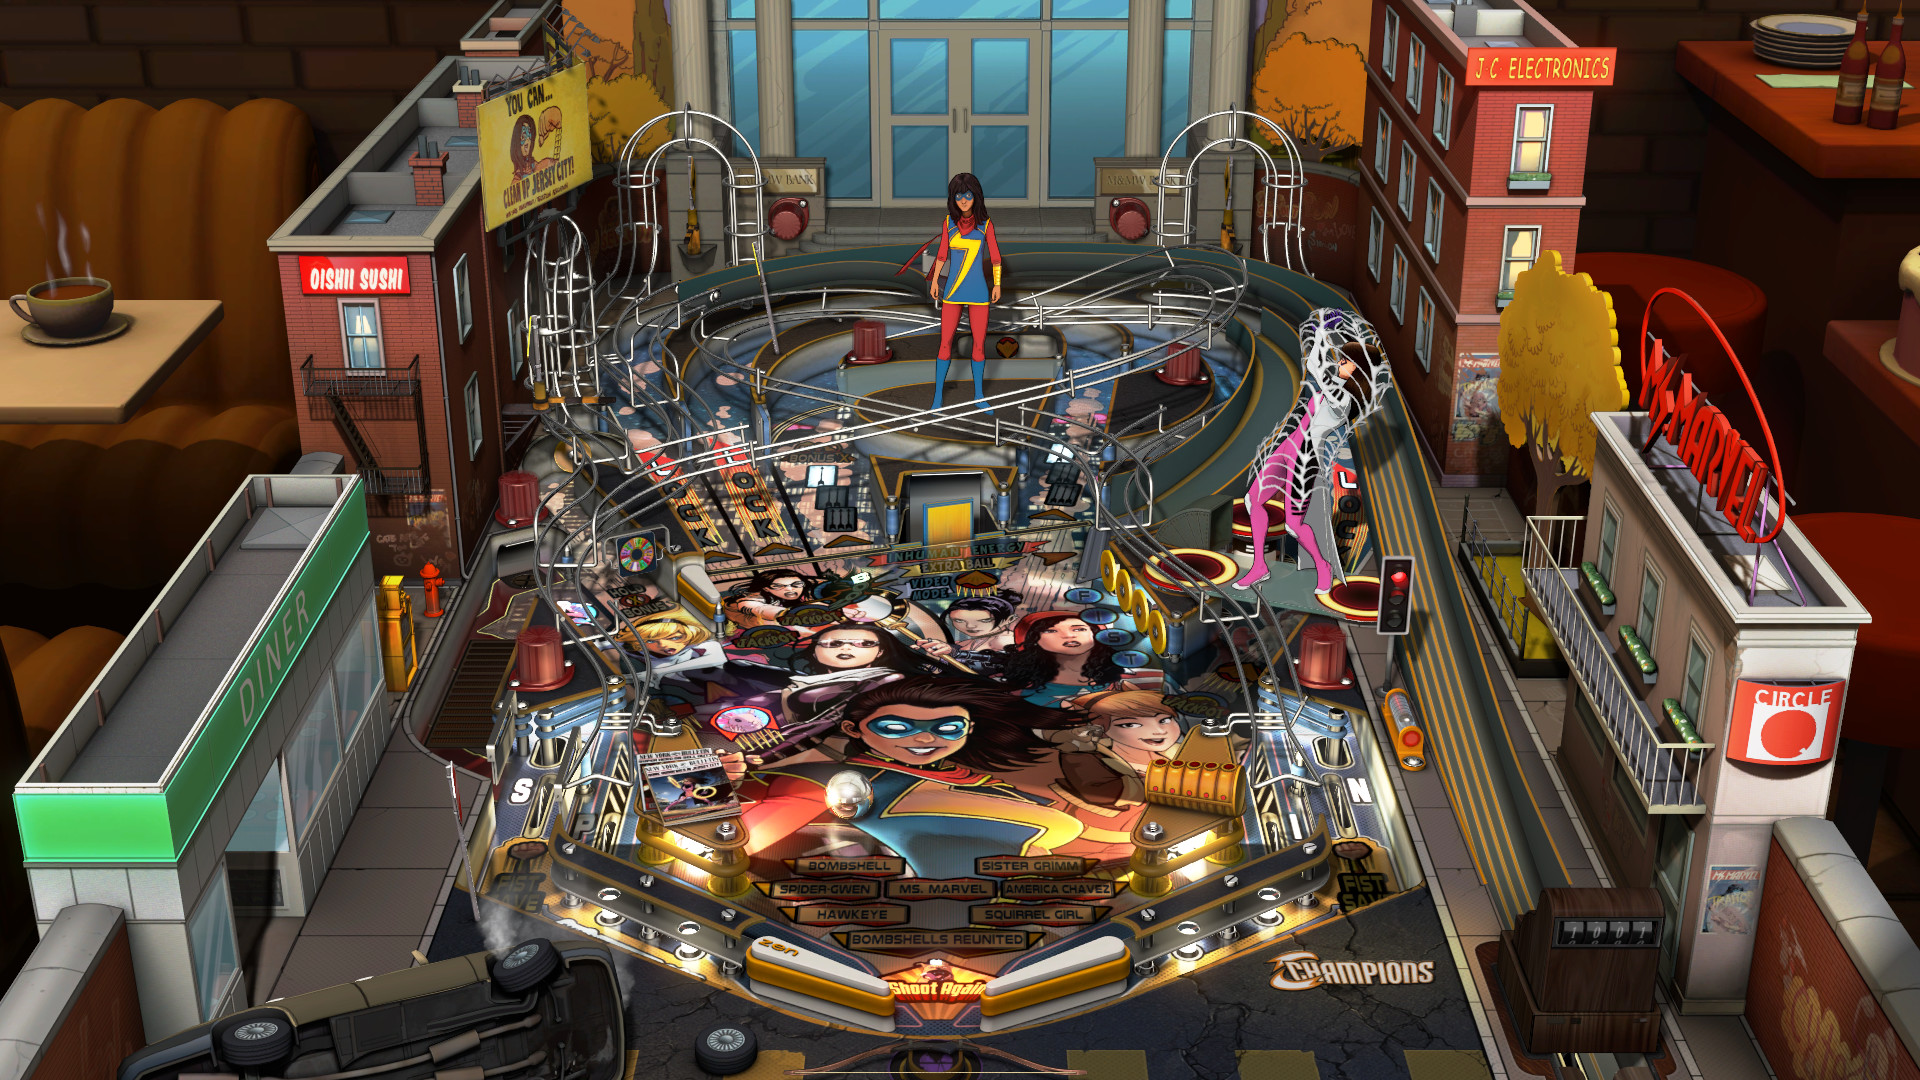 Pinball FX3 - Marvel Pinball - Marvel's Women Of Power DLC Steam CD Key